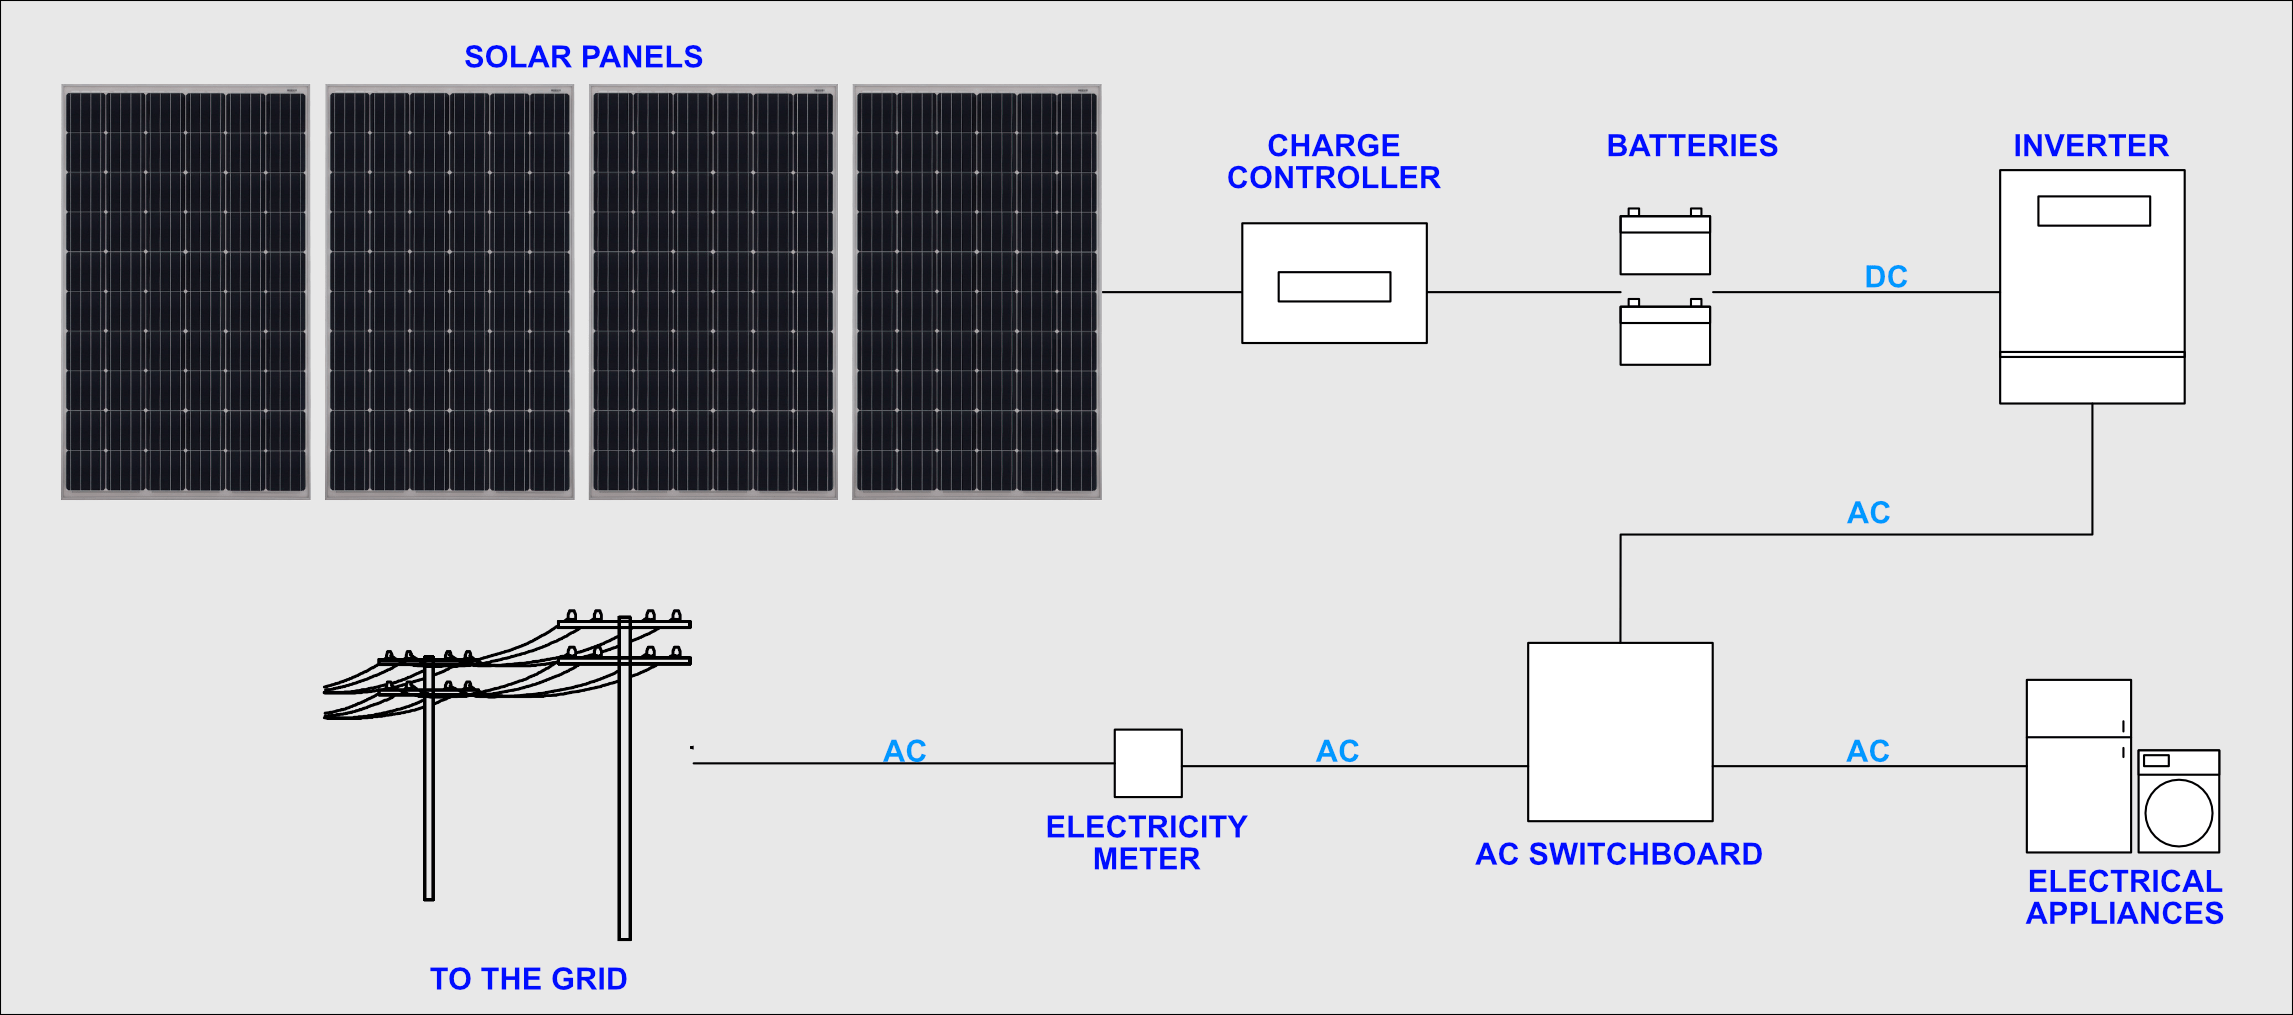 II. How Does Solar Photovoltaics Work?